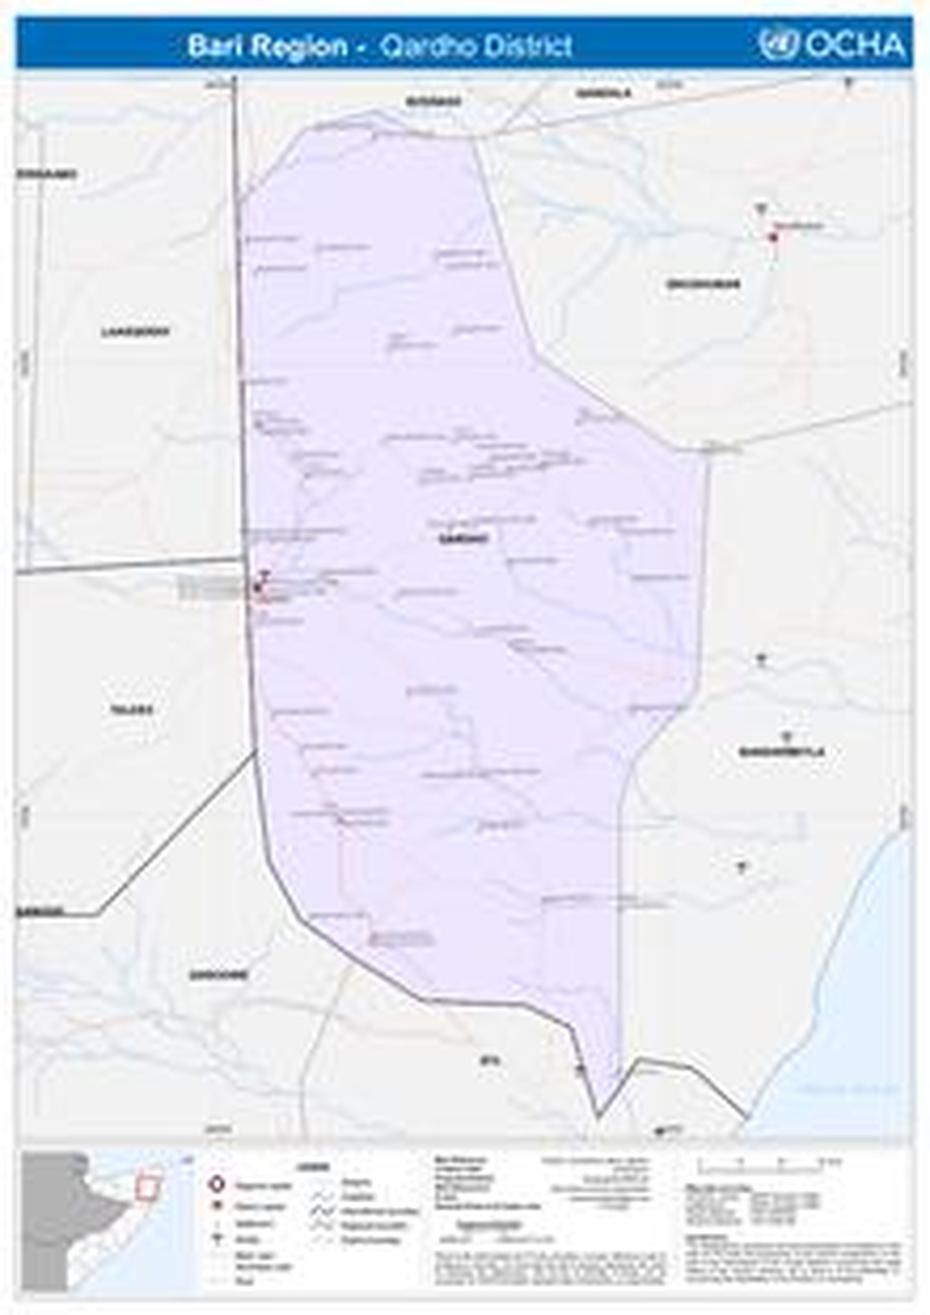 Somalia Reference Map – Qardho District (22 Feb 2012) – Somalia | Reliefwe, Qardho, Somalia, Beledweyne Somalia, Somalia  Africa